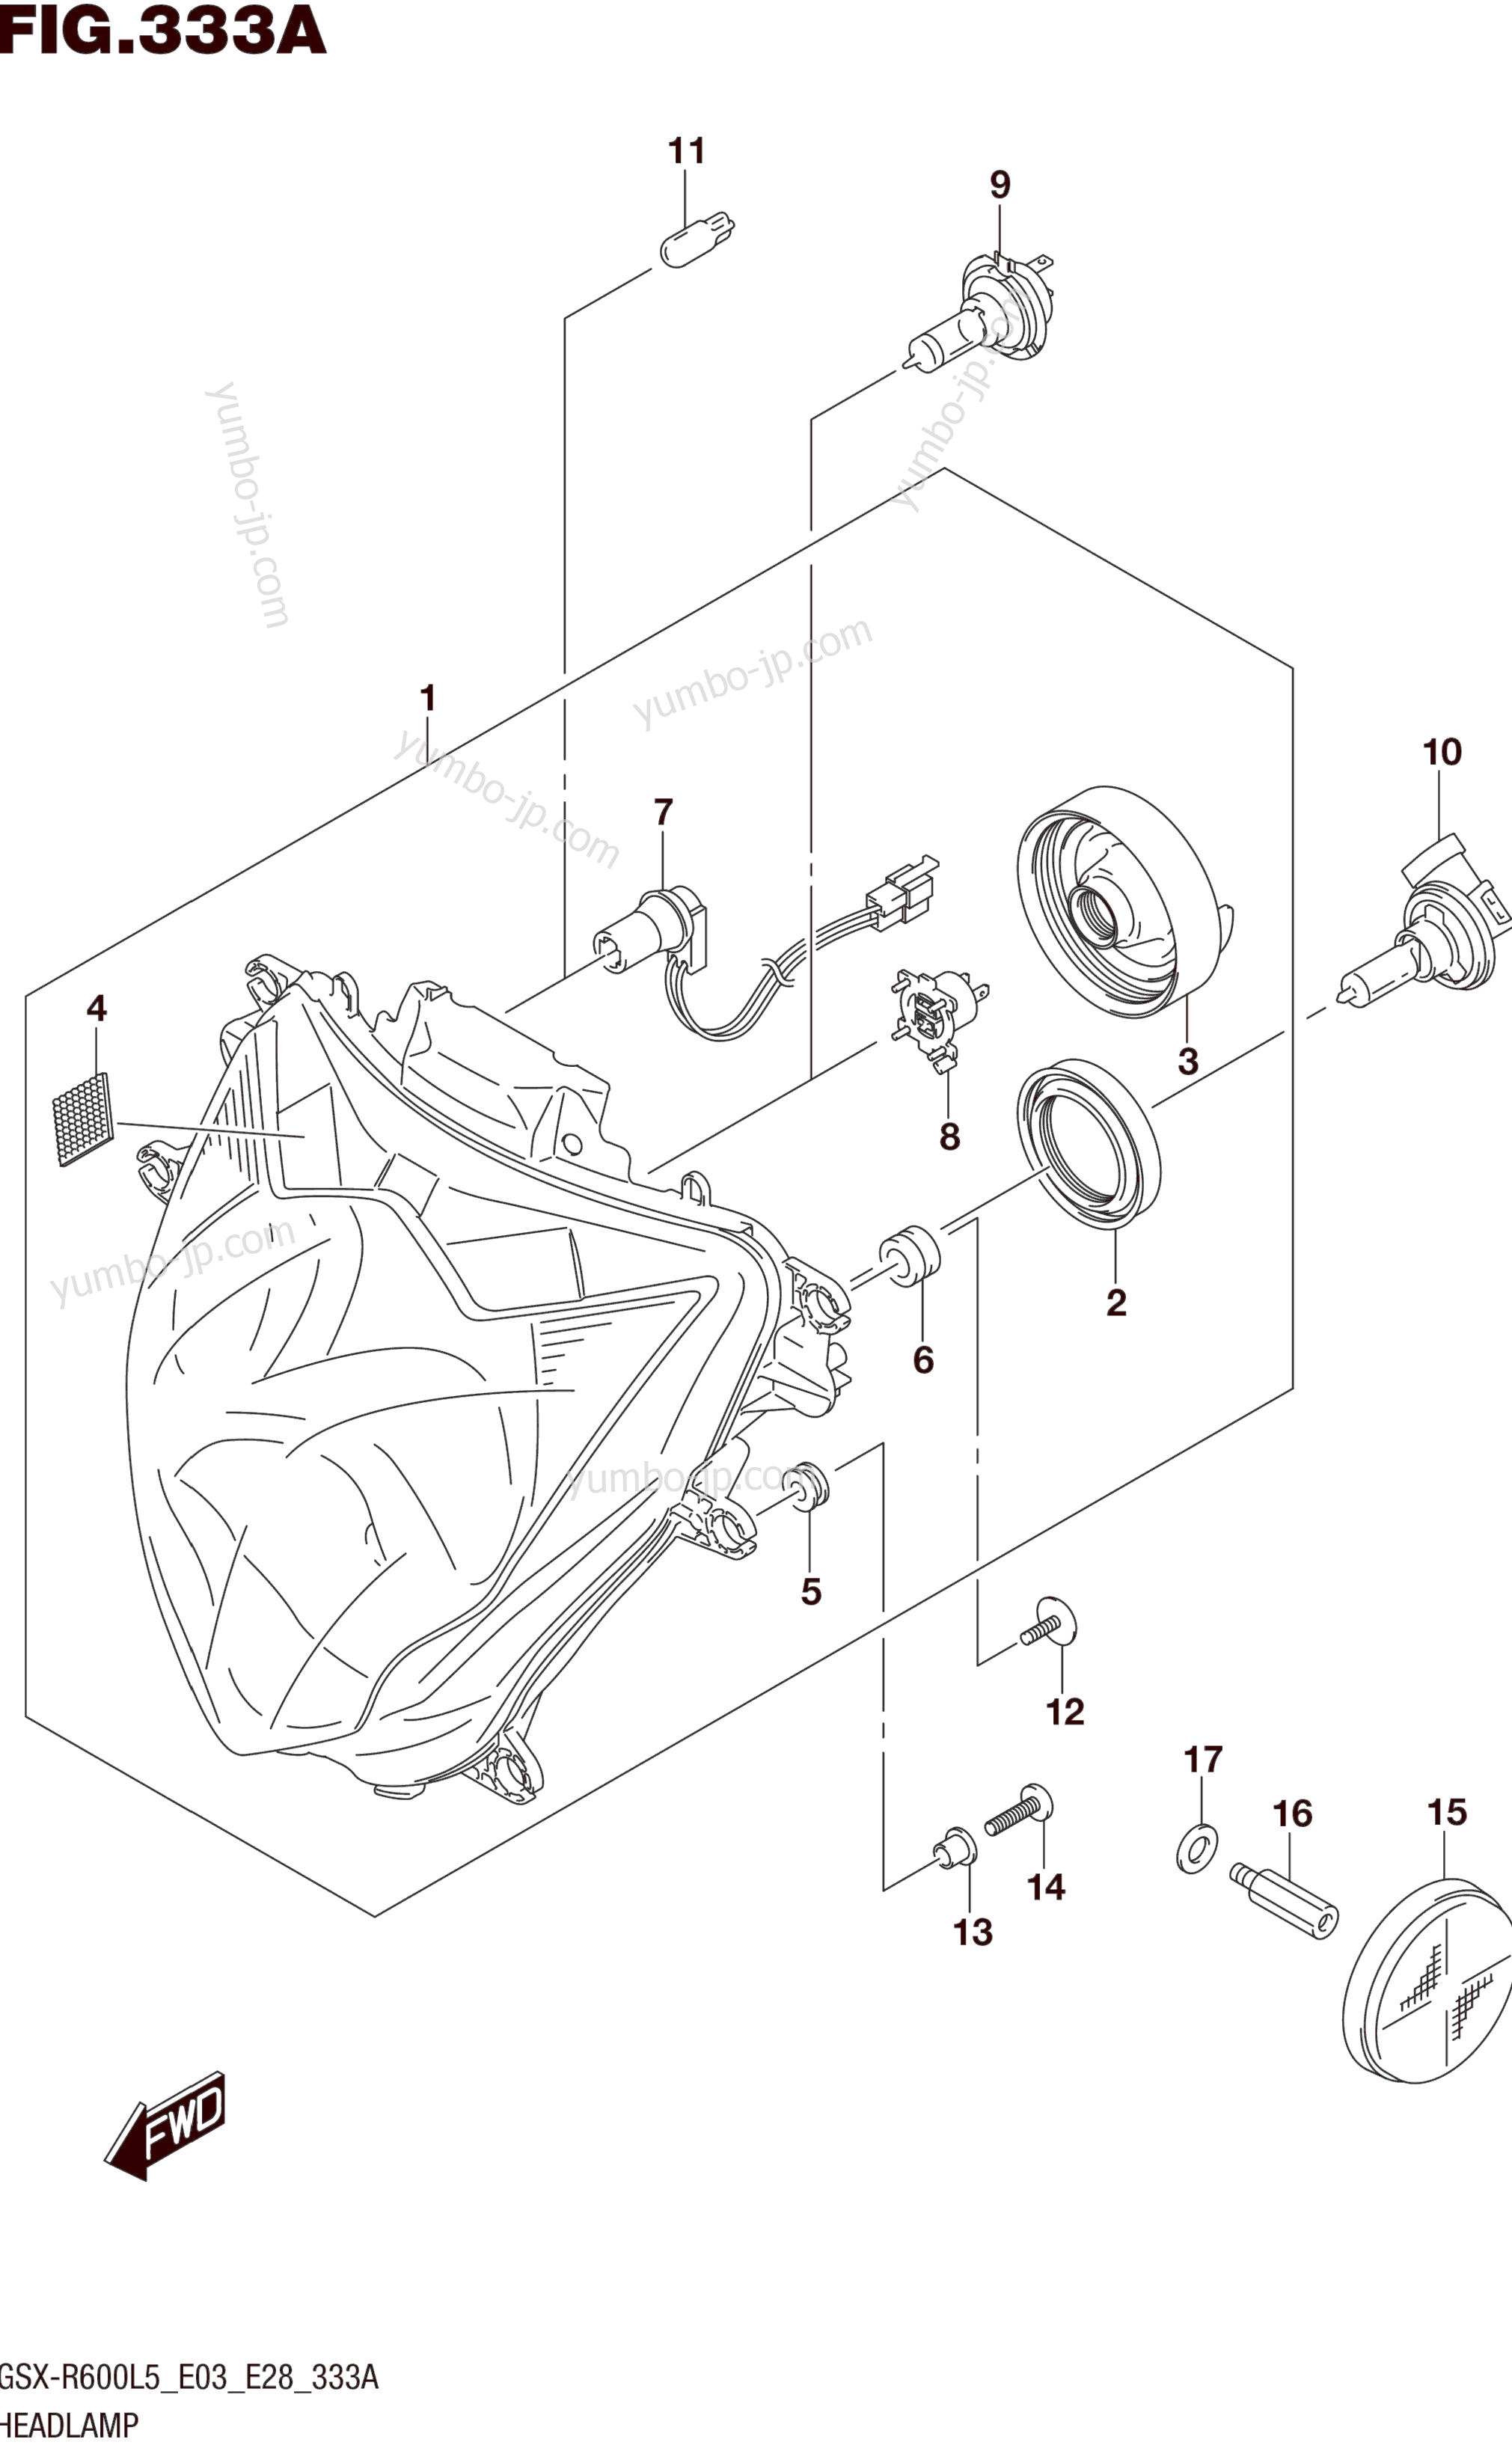 HEADLAMP (GSX-R600L5 E03) for motorcycles SUZUKI GSX-R600 2015 year